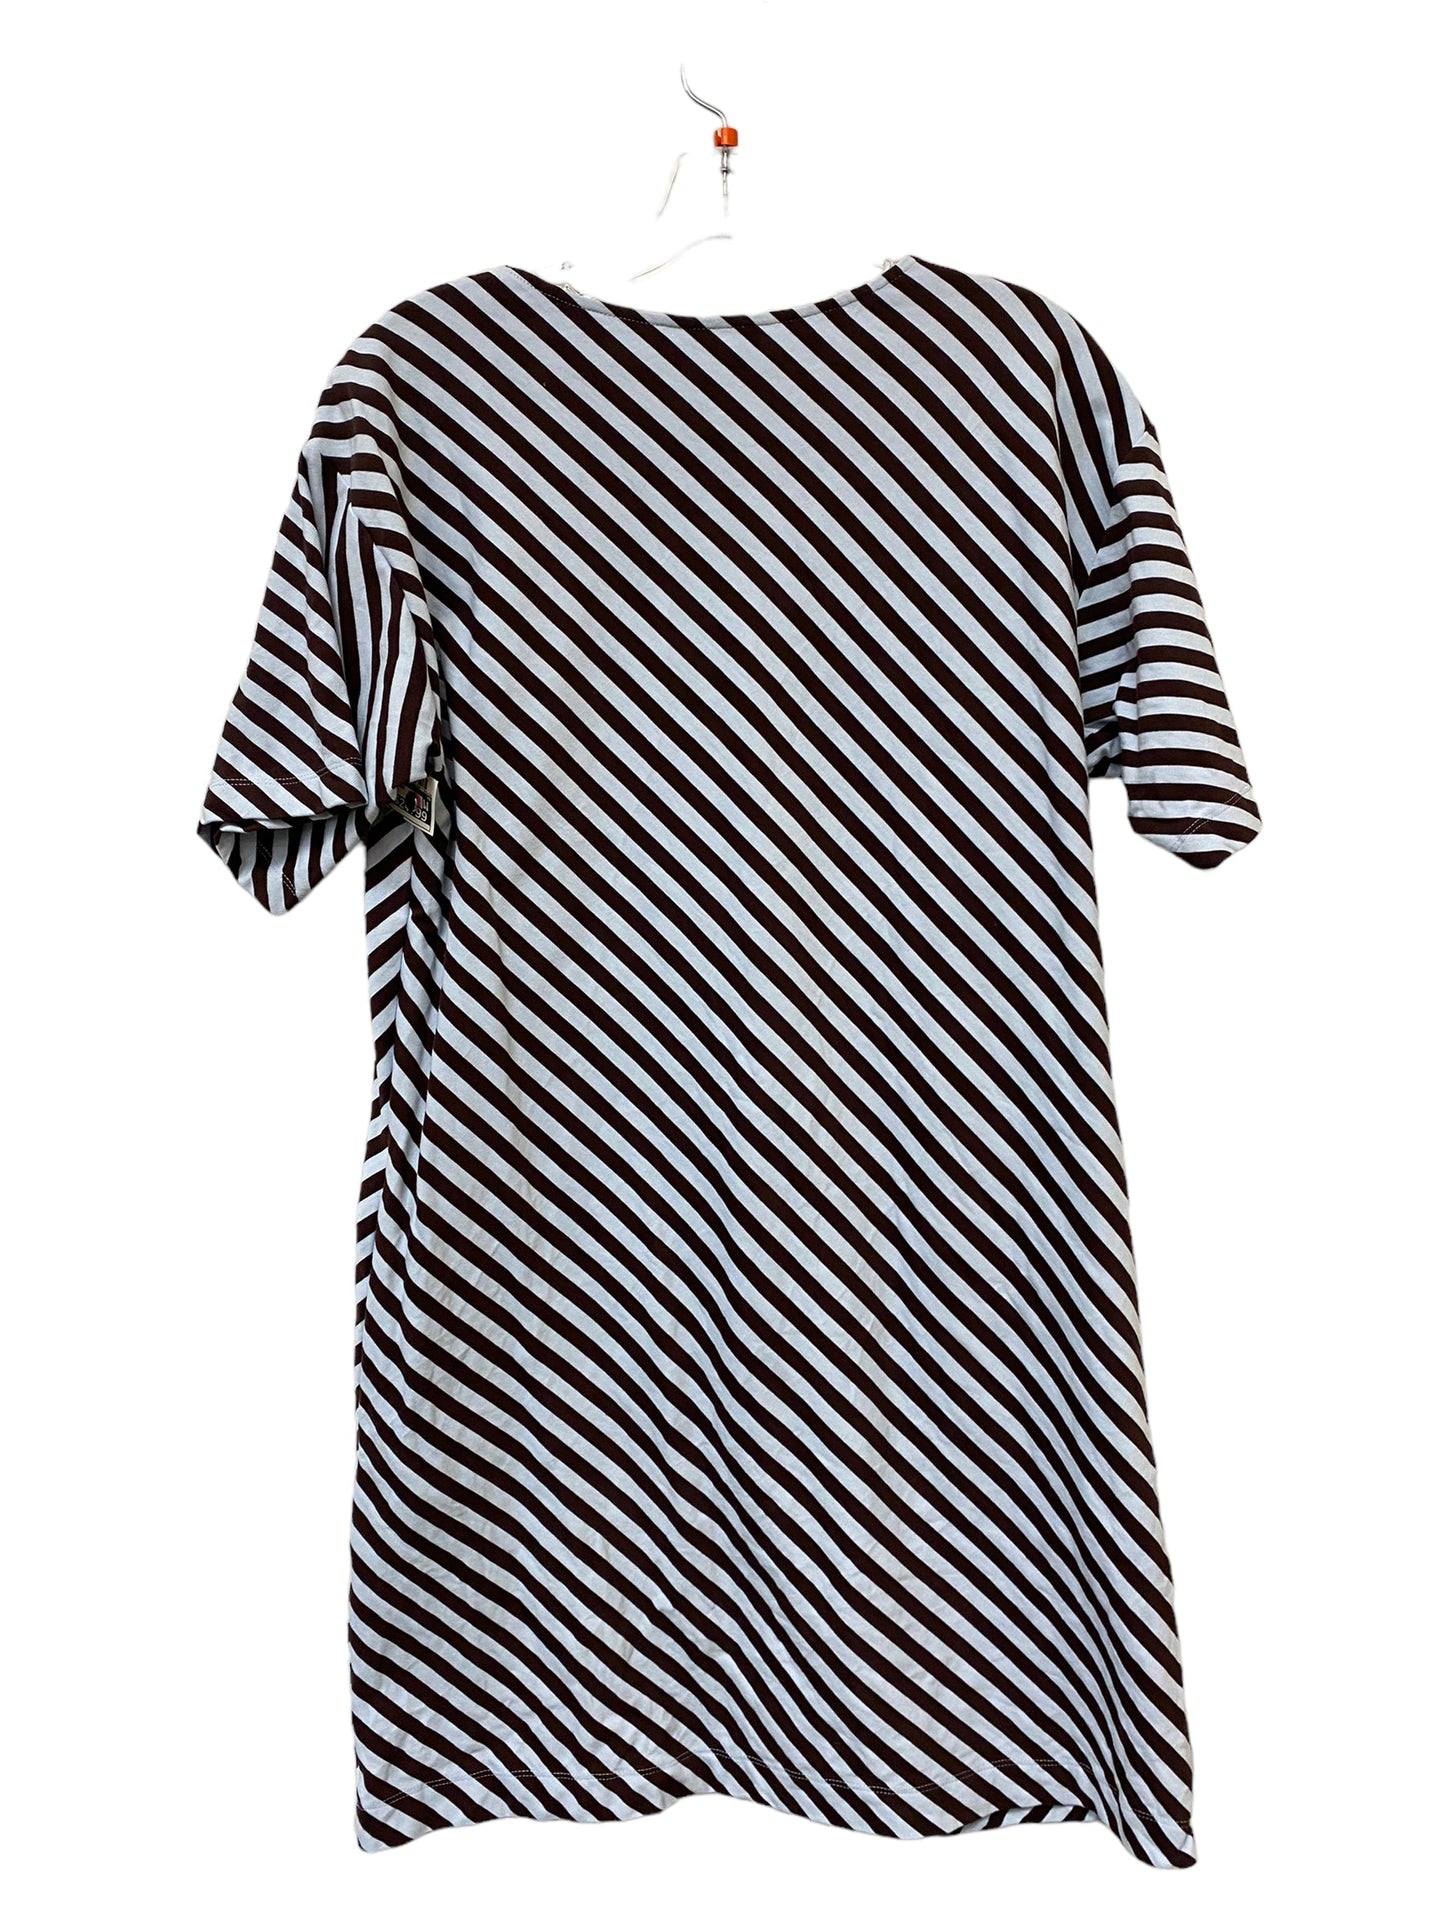 Dress Casual Midi By Tory Burch  Size: M